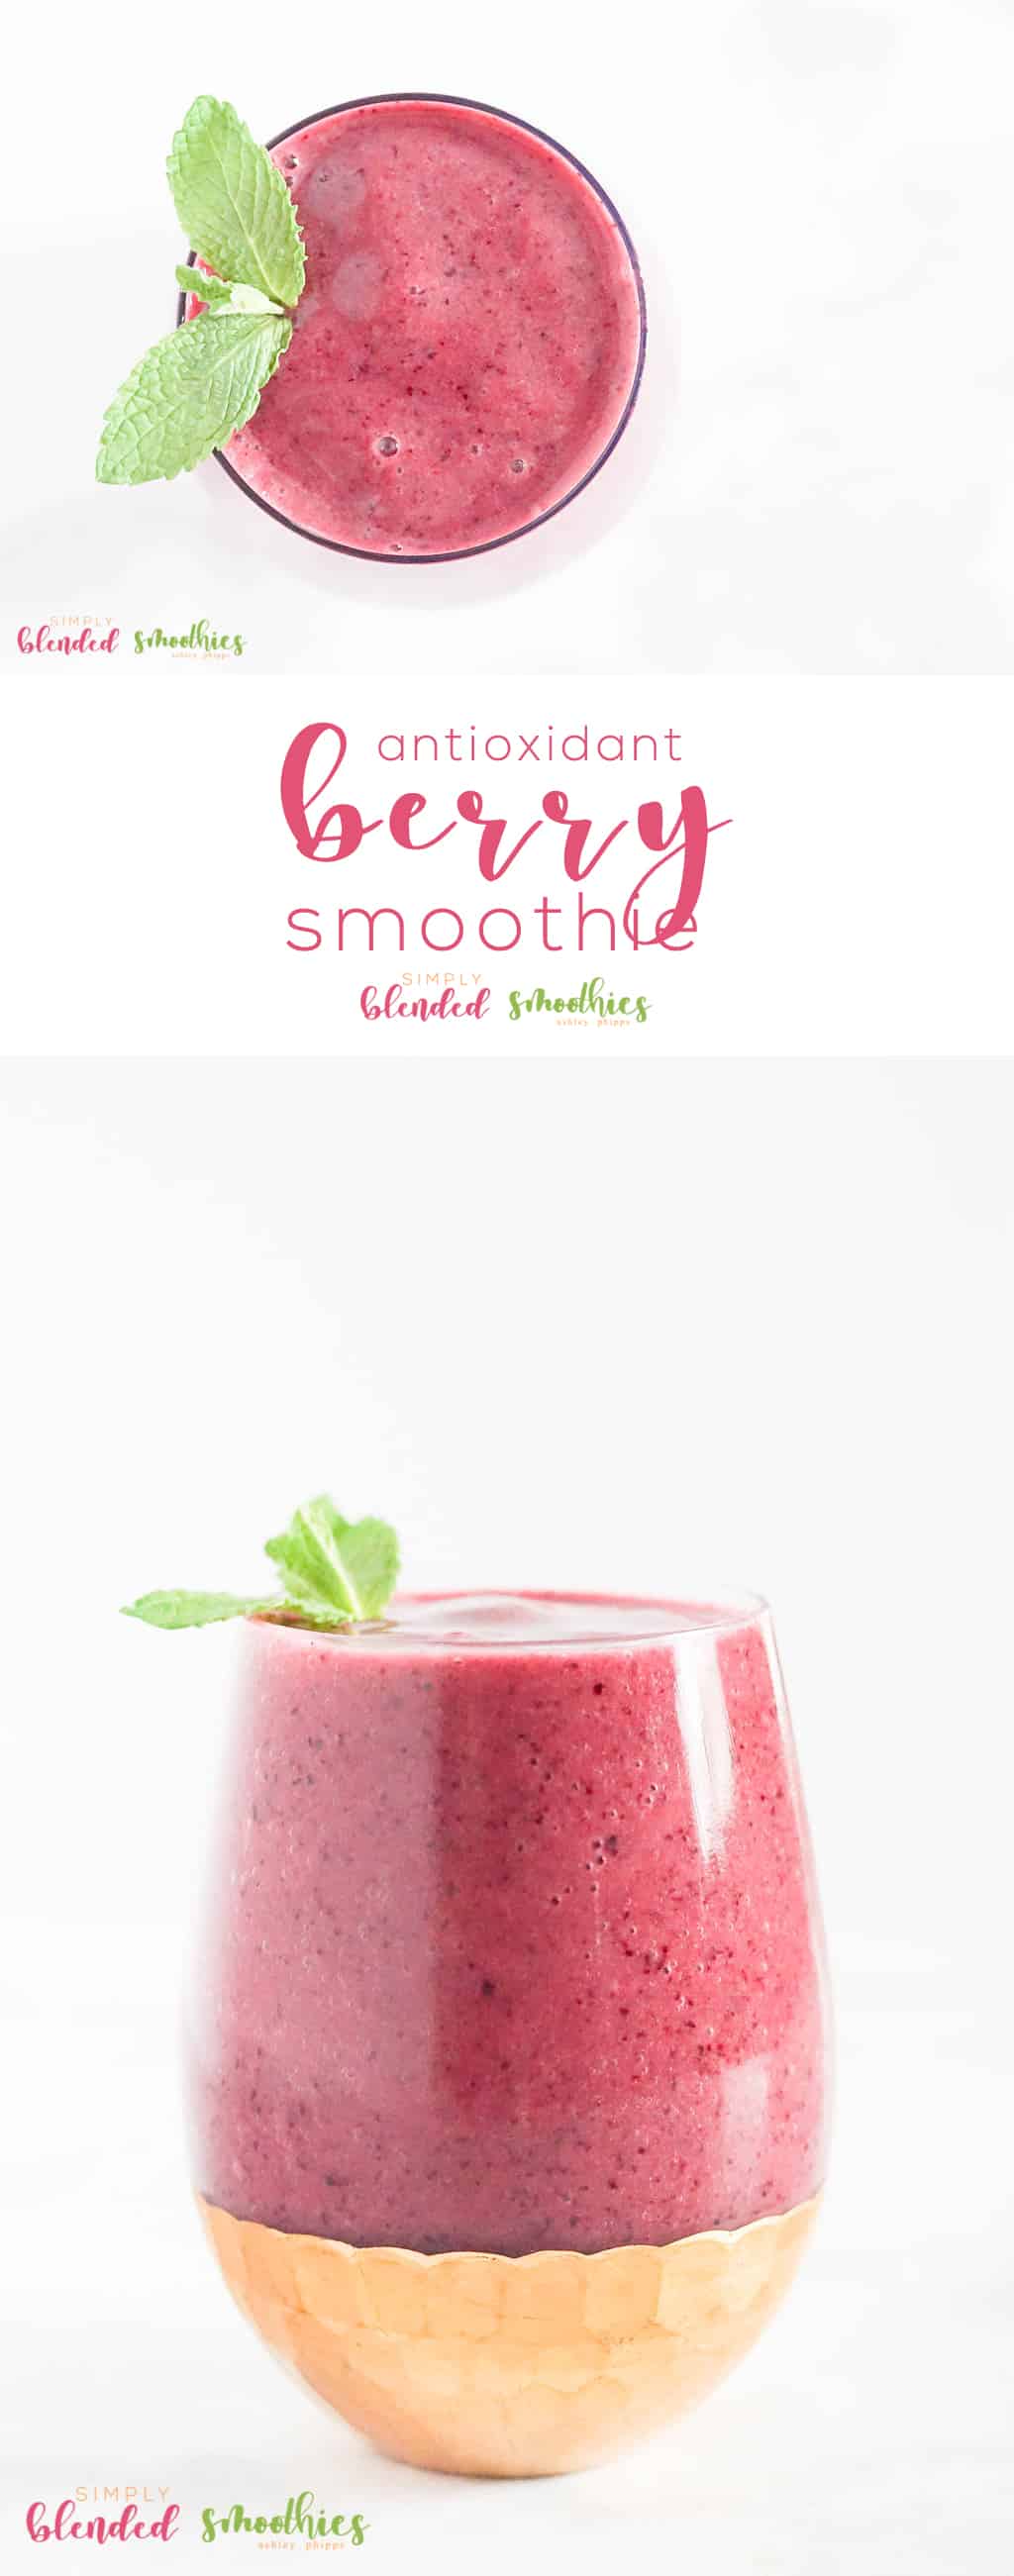 Antioxidant Berry Smoothie Recipe -A Delicious Berry Healthy Smoothie That Is High In Antioxidants